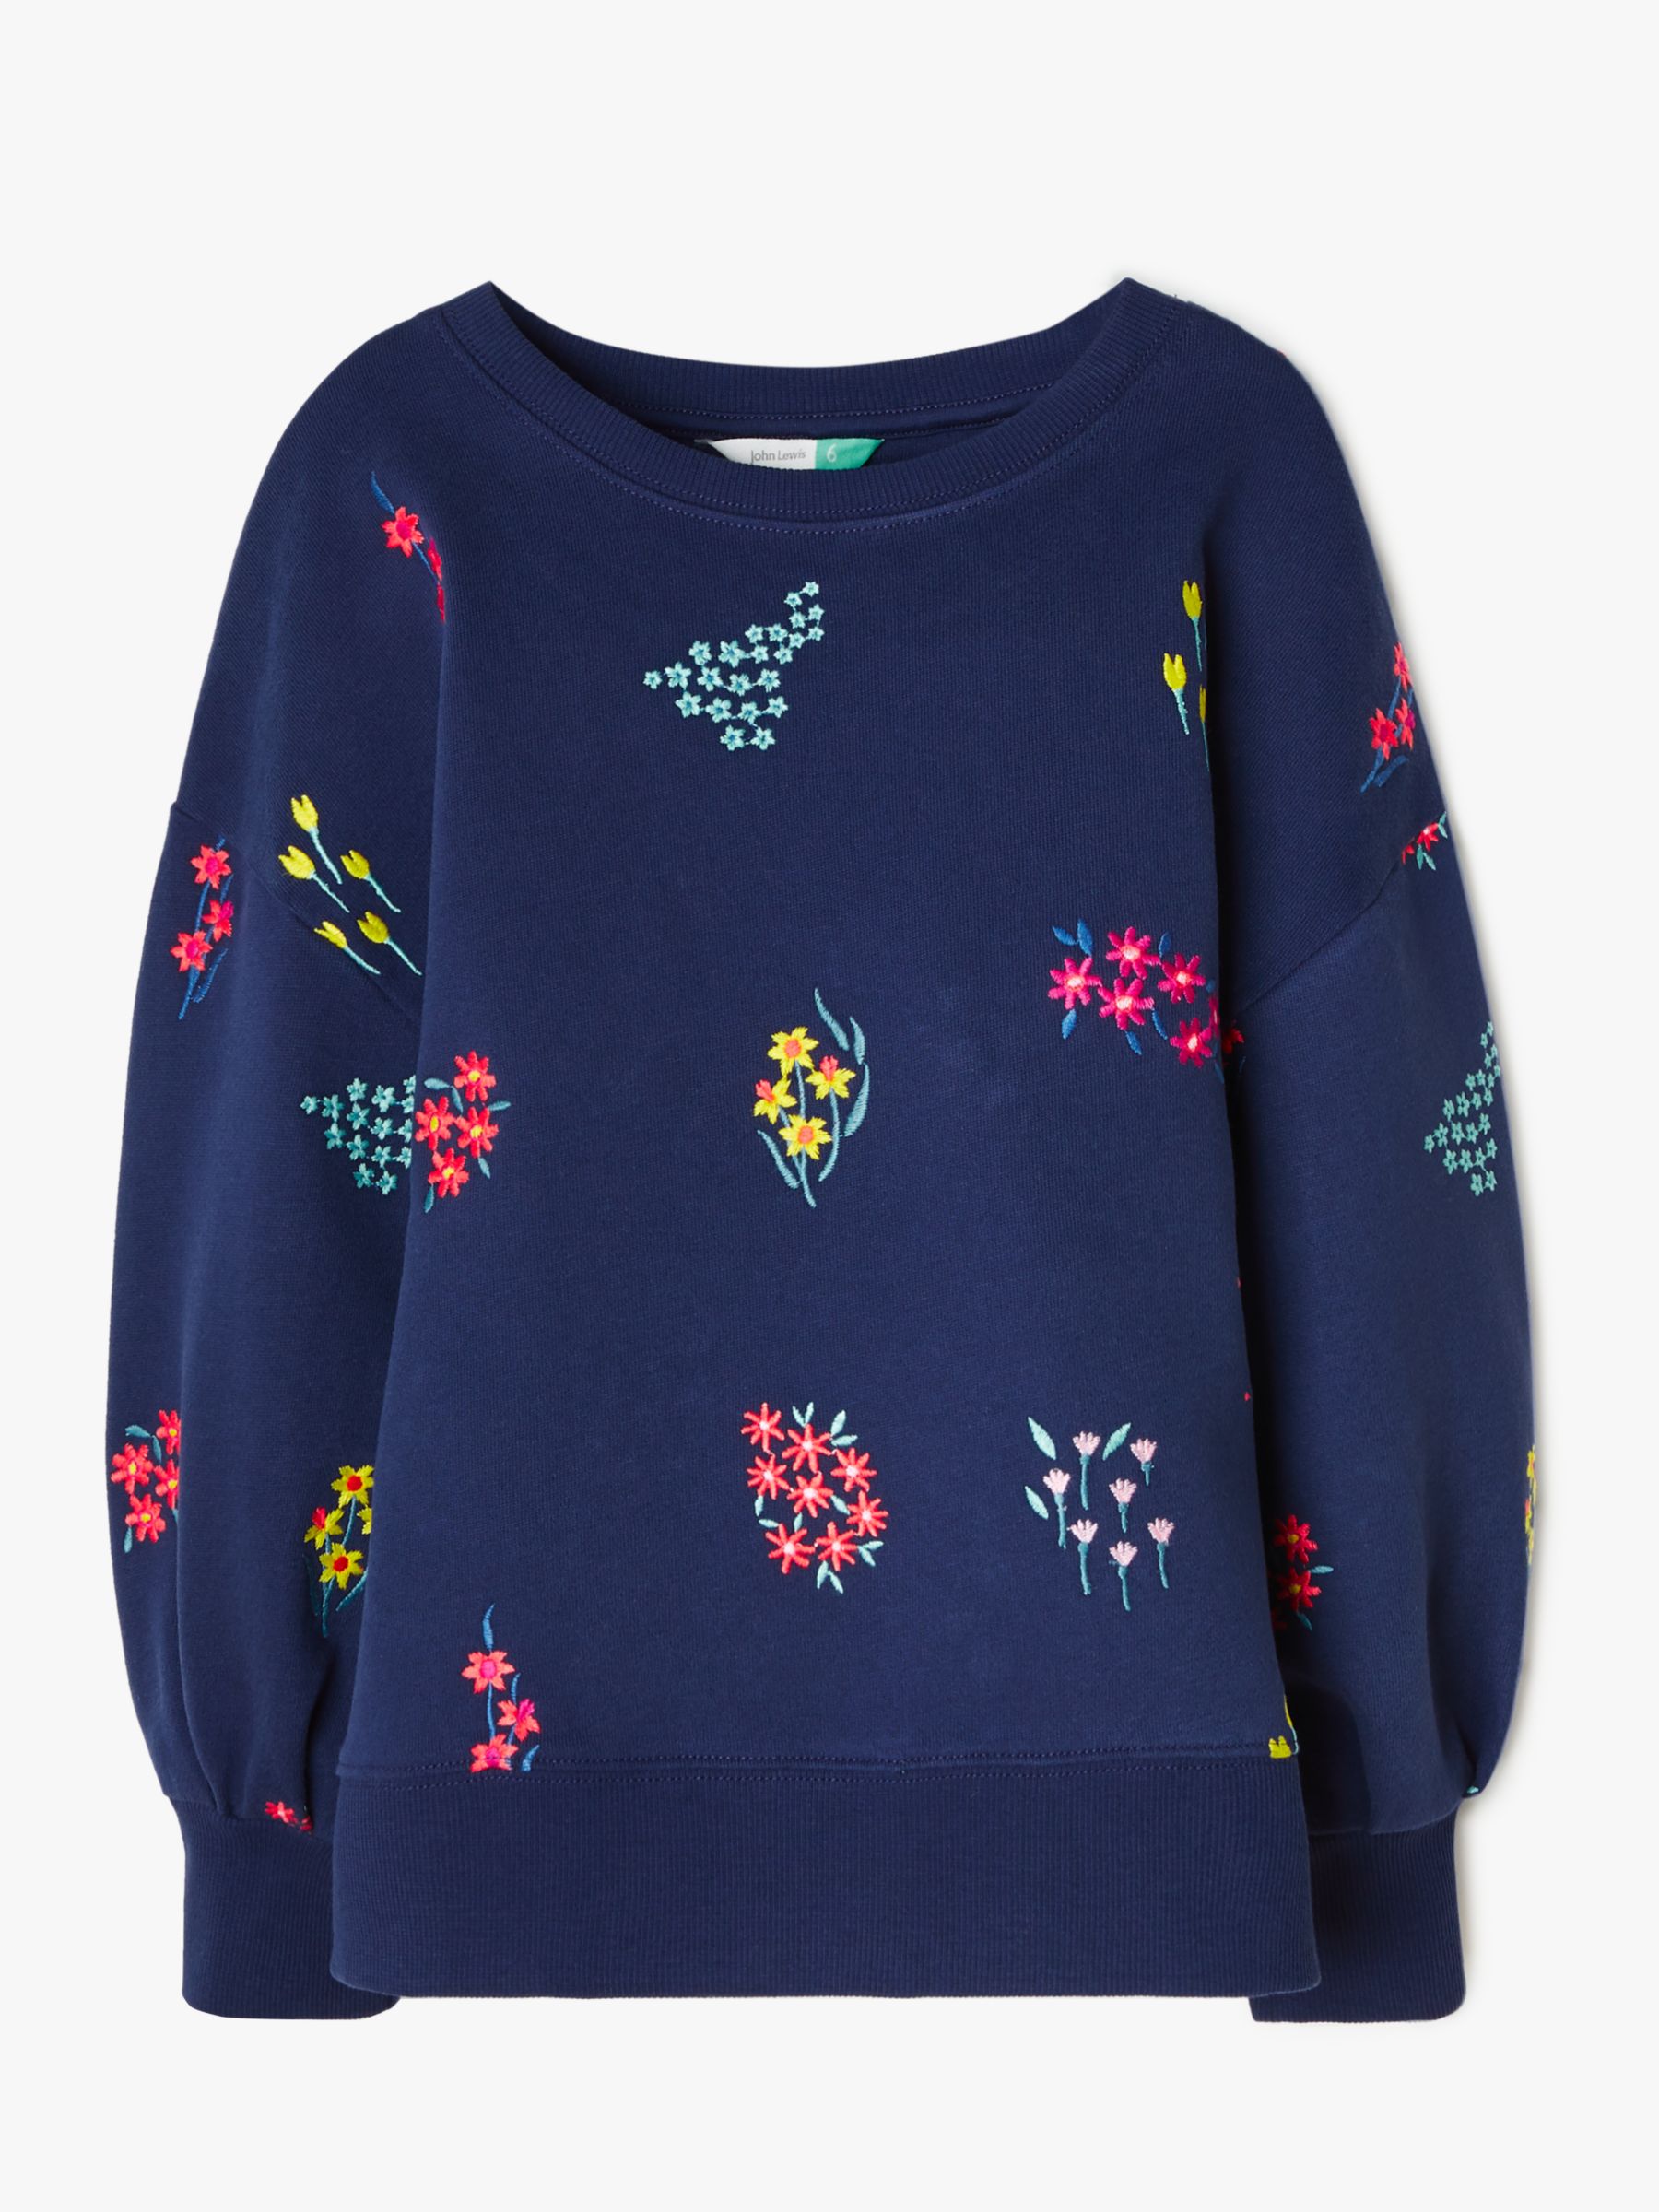 John Lewis & Partners' Girls' Floral Embroidery Sweatshirt, Navy